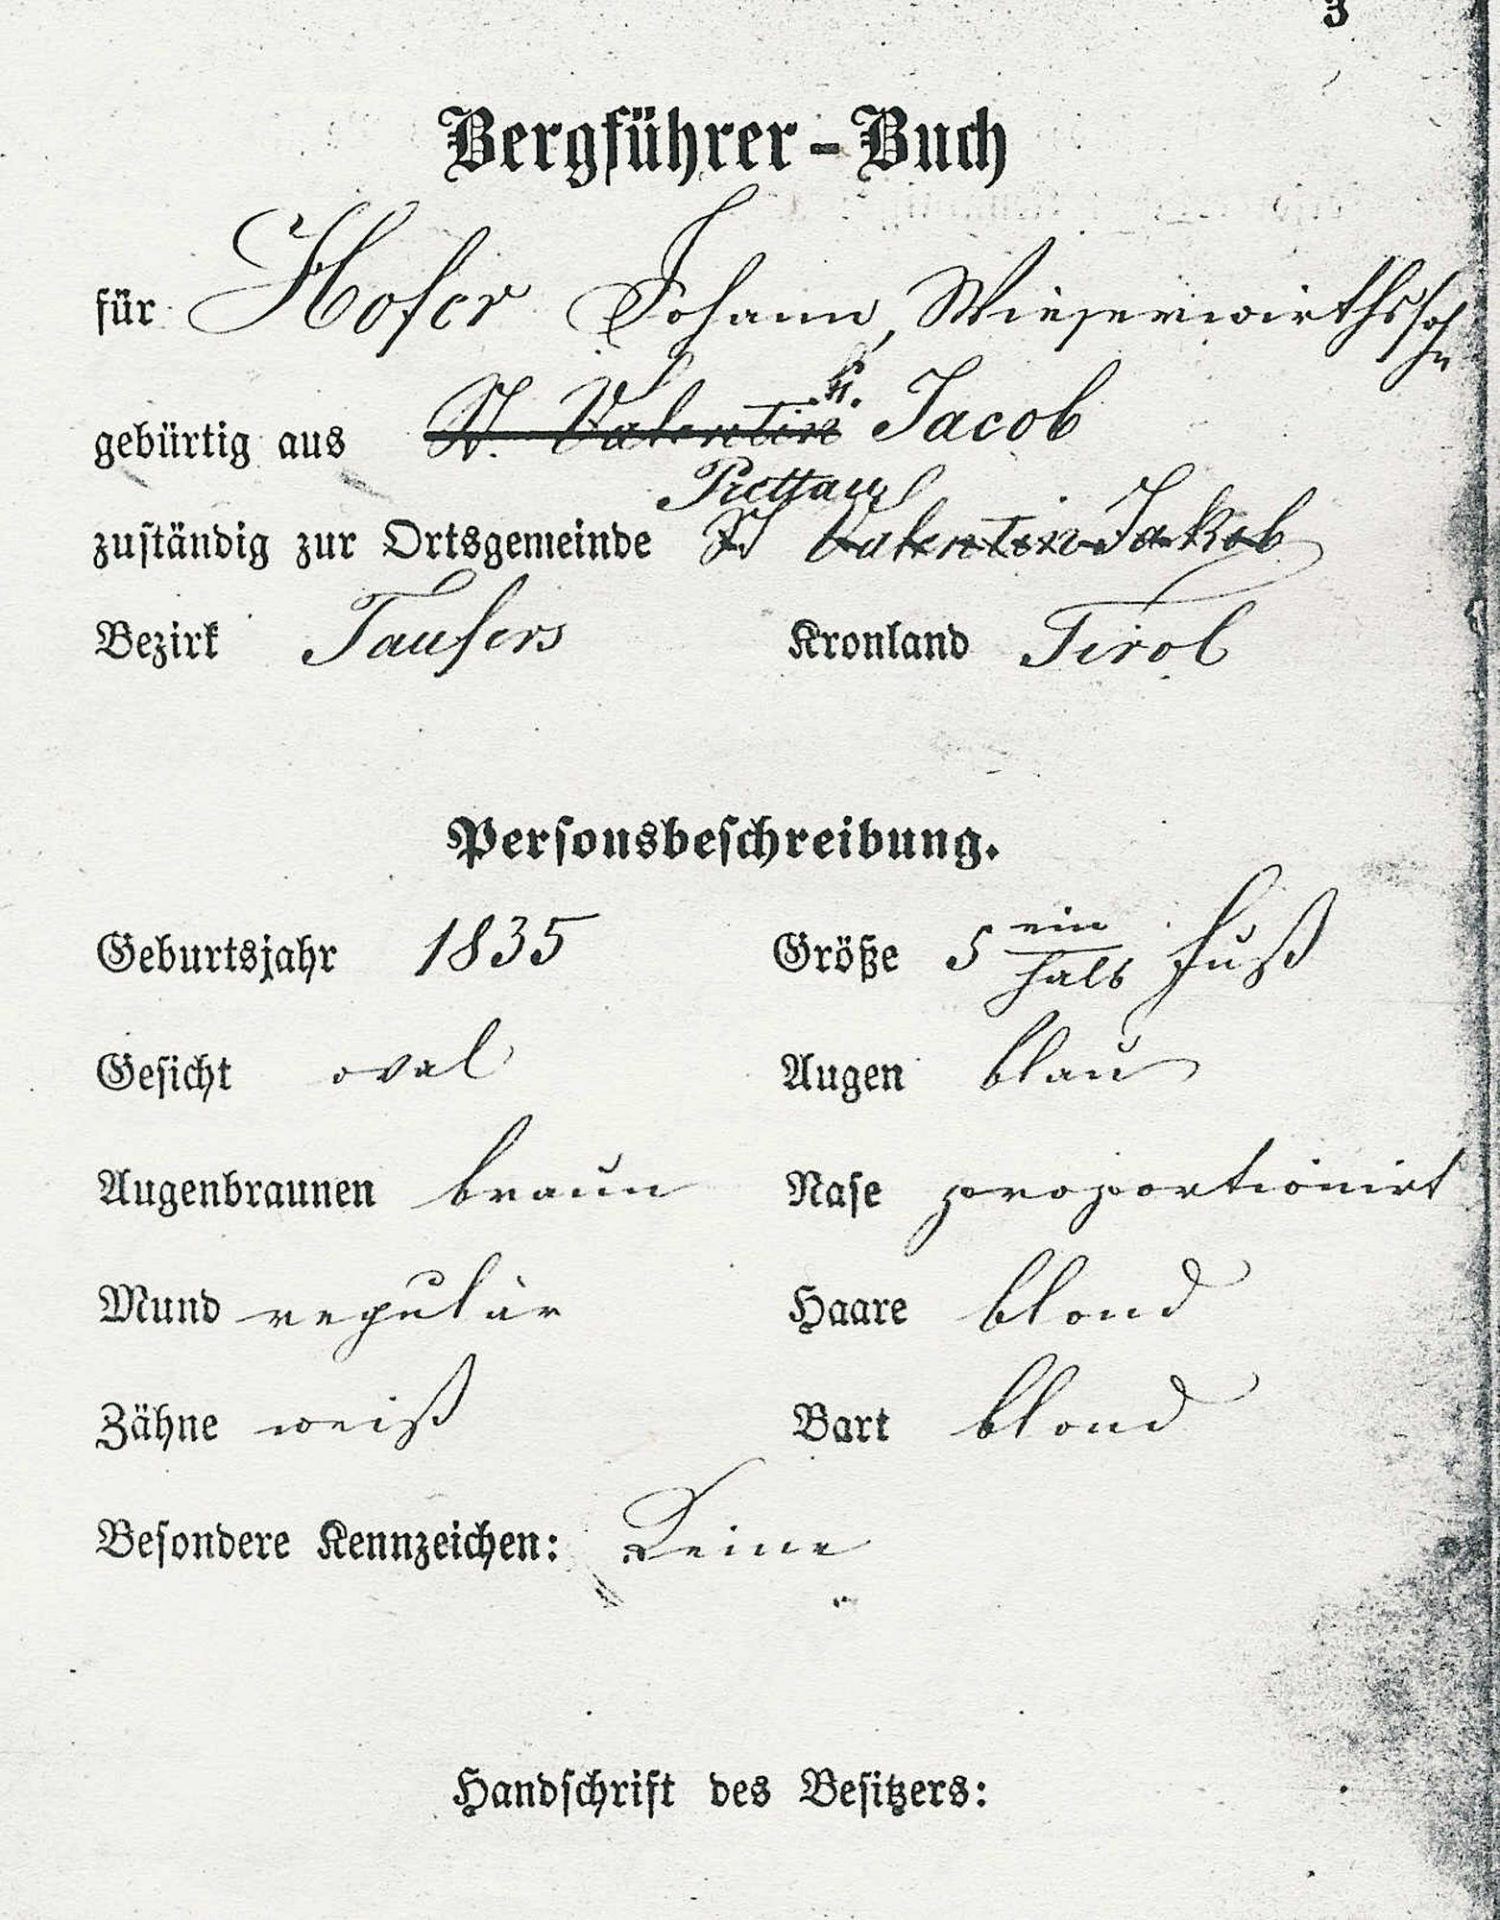 Bergführerbuch Johann Hofer I Berge erleben © Archiv Ingrid Beikircher